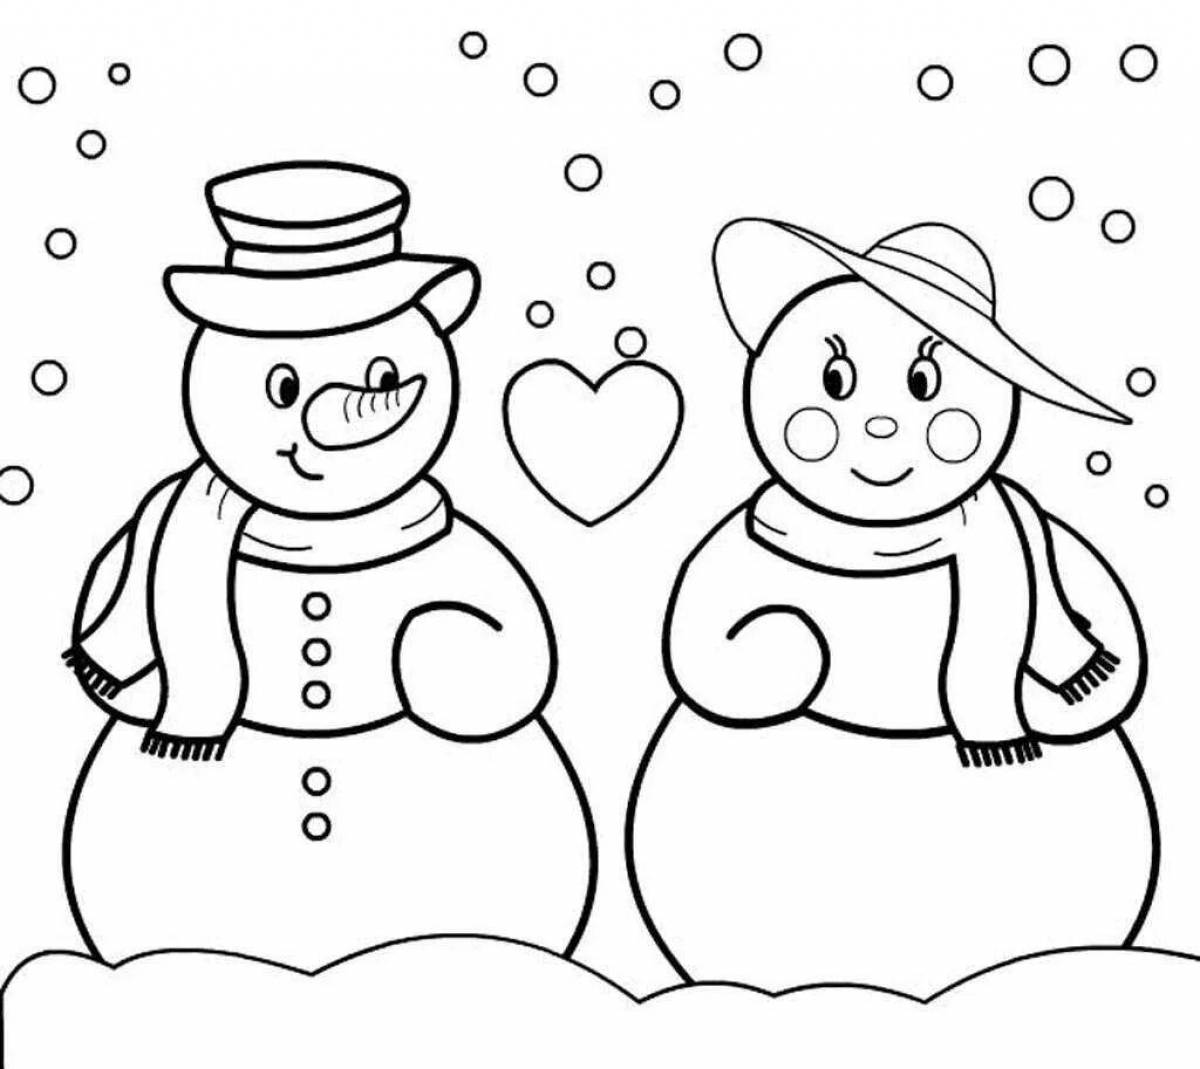 Smiling children's snowman coloring book